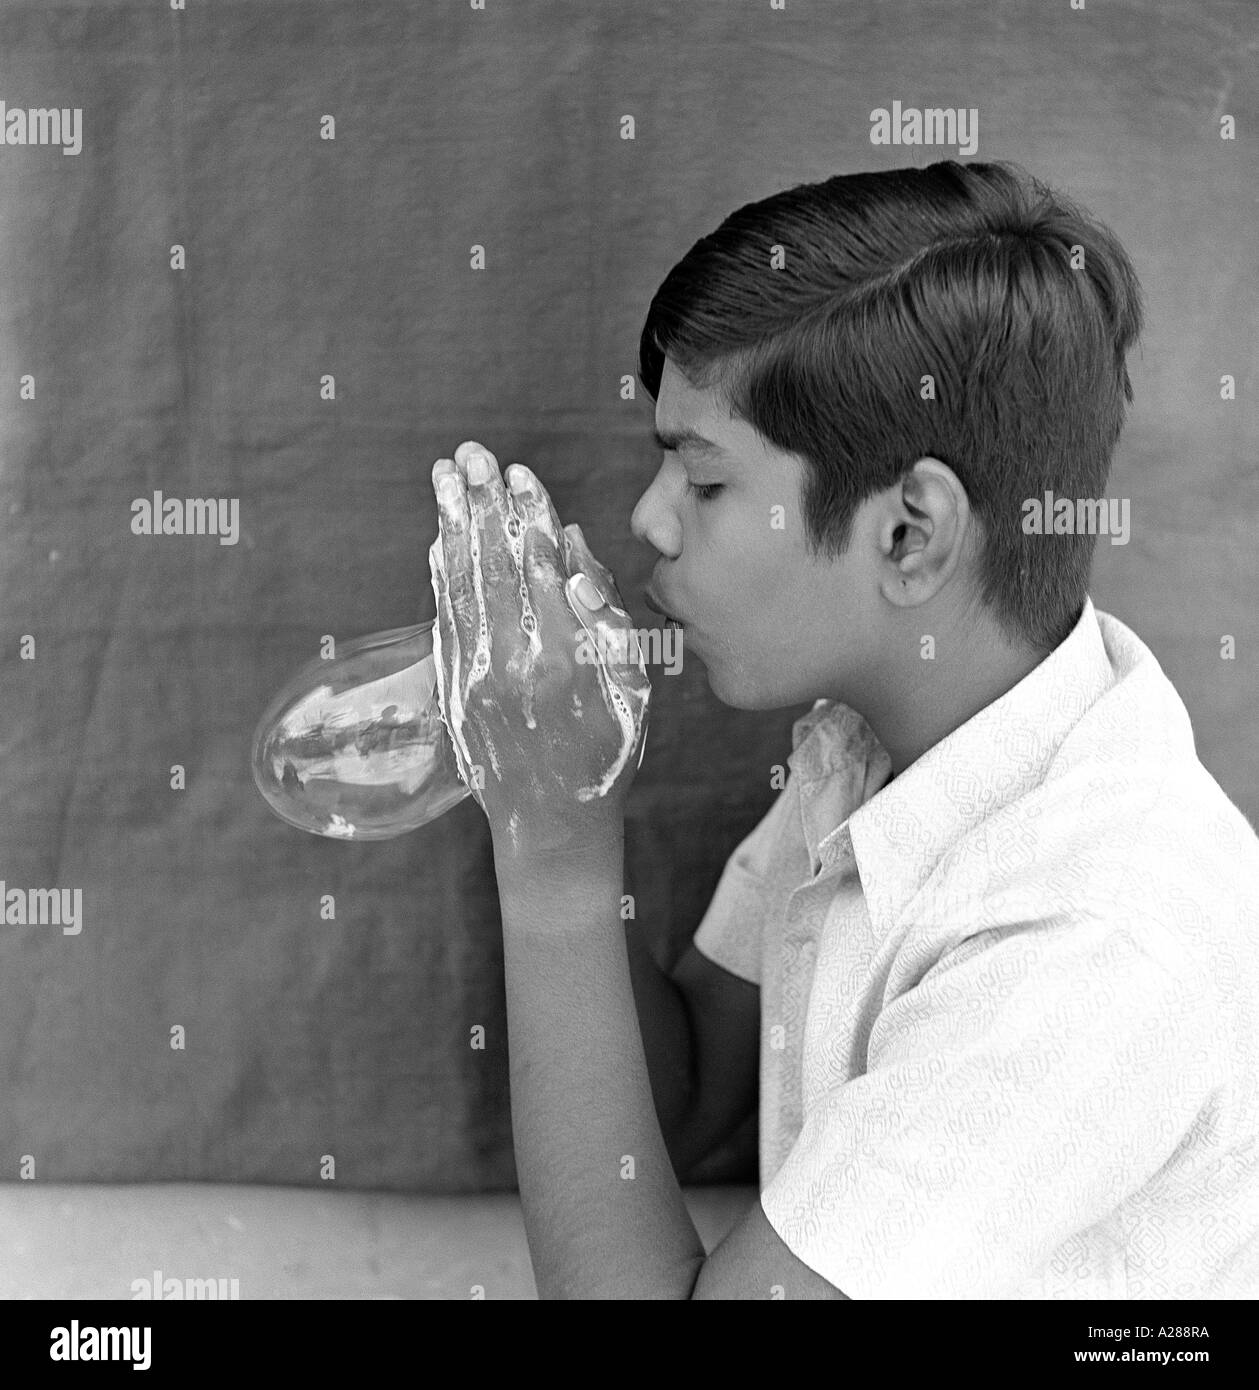 boy blowing soap bubble Stock Photo